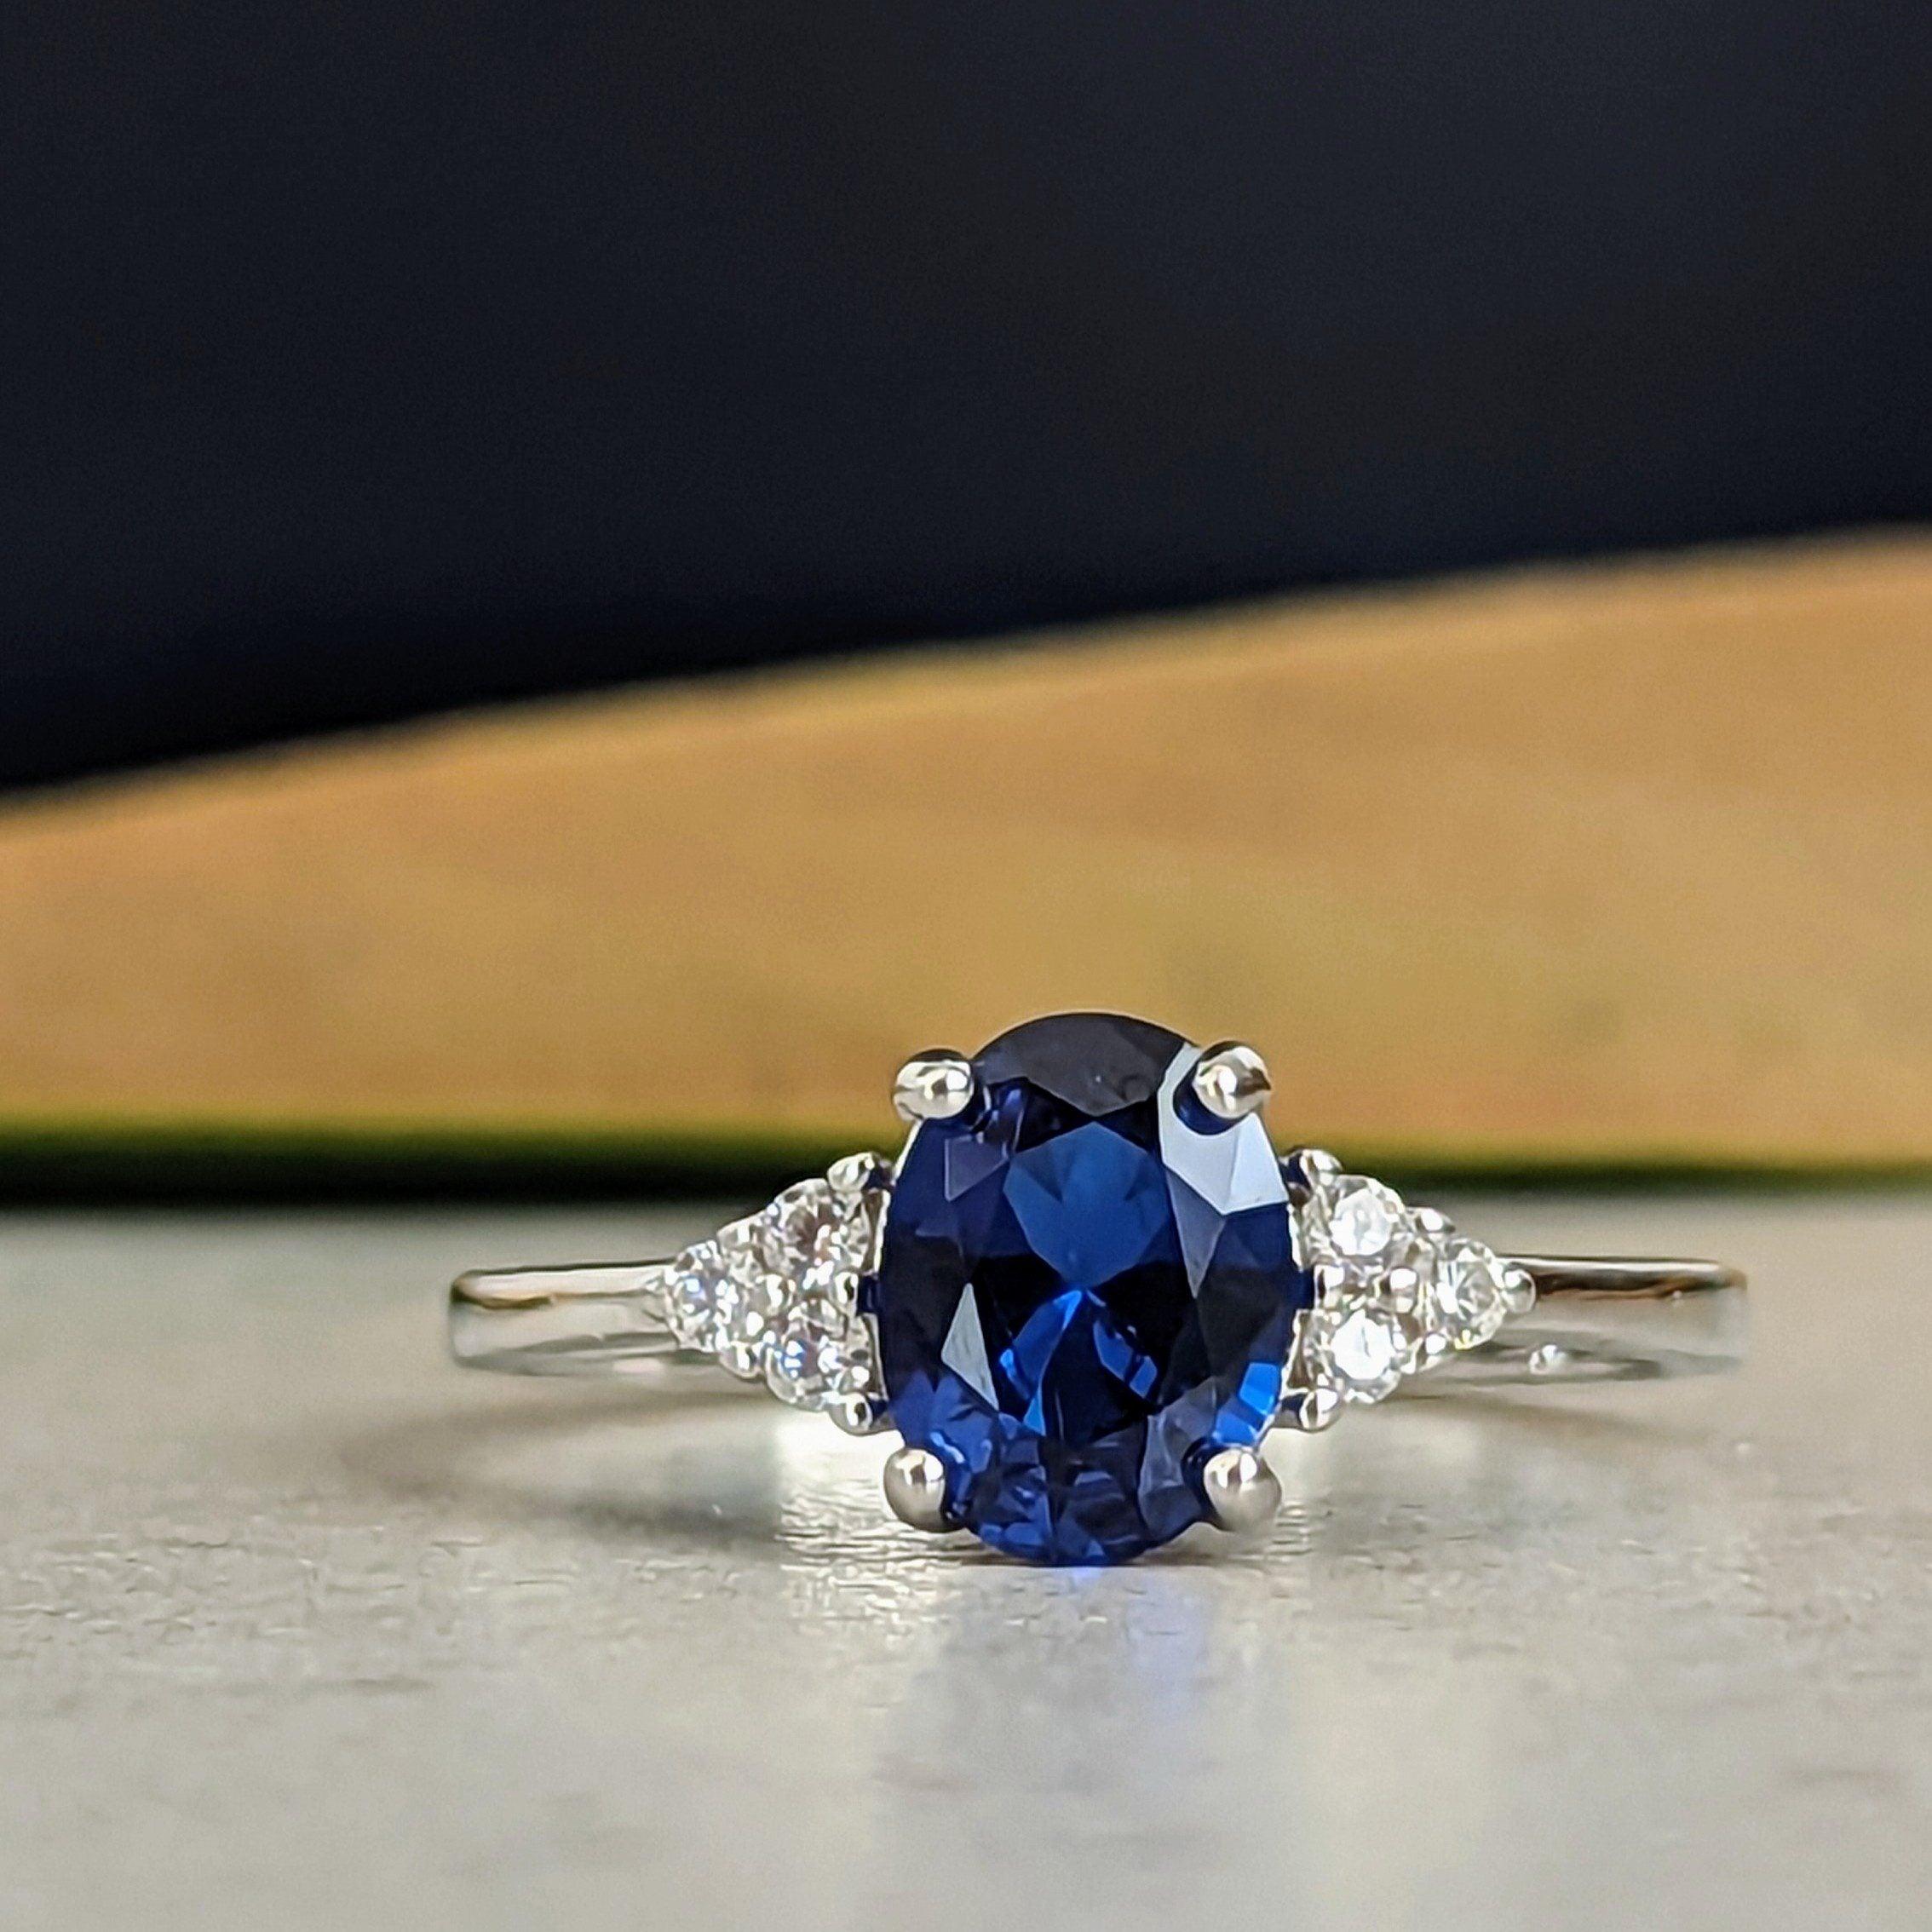 Sapphire Aphrodite Ring - Stunning Blue